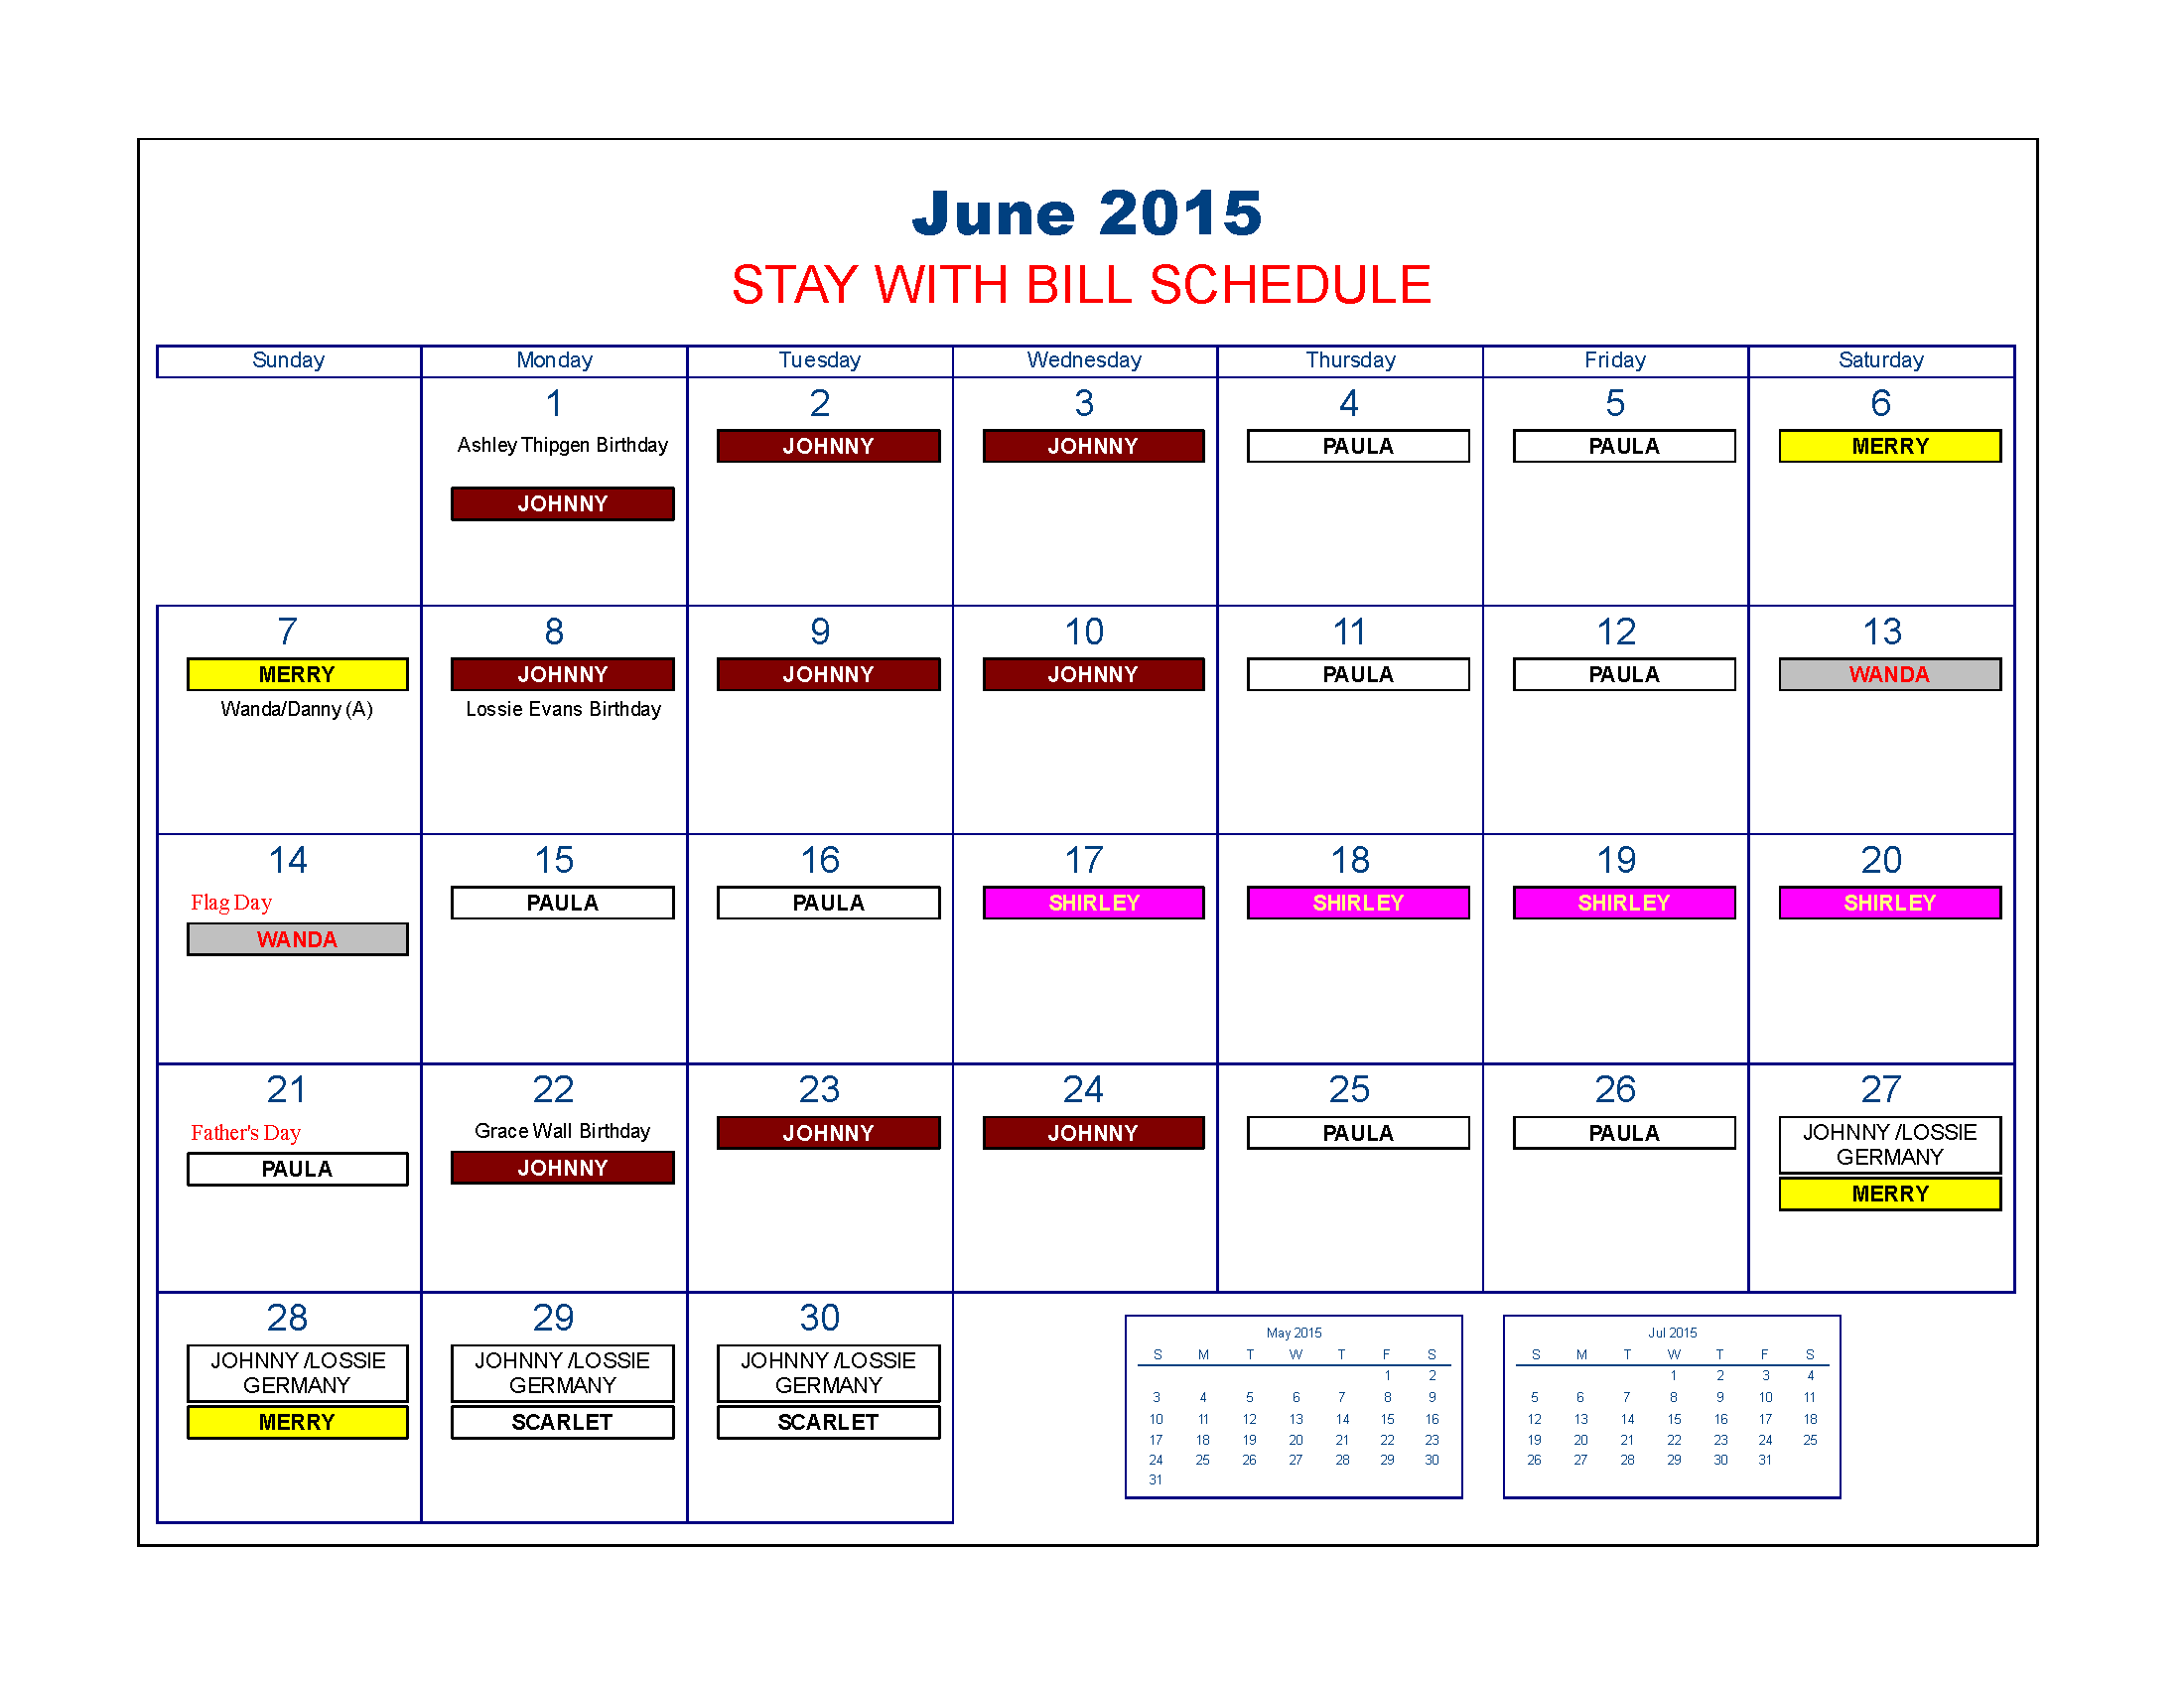 15June Bill Schedule